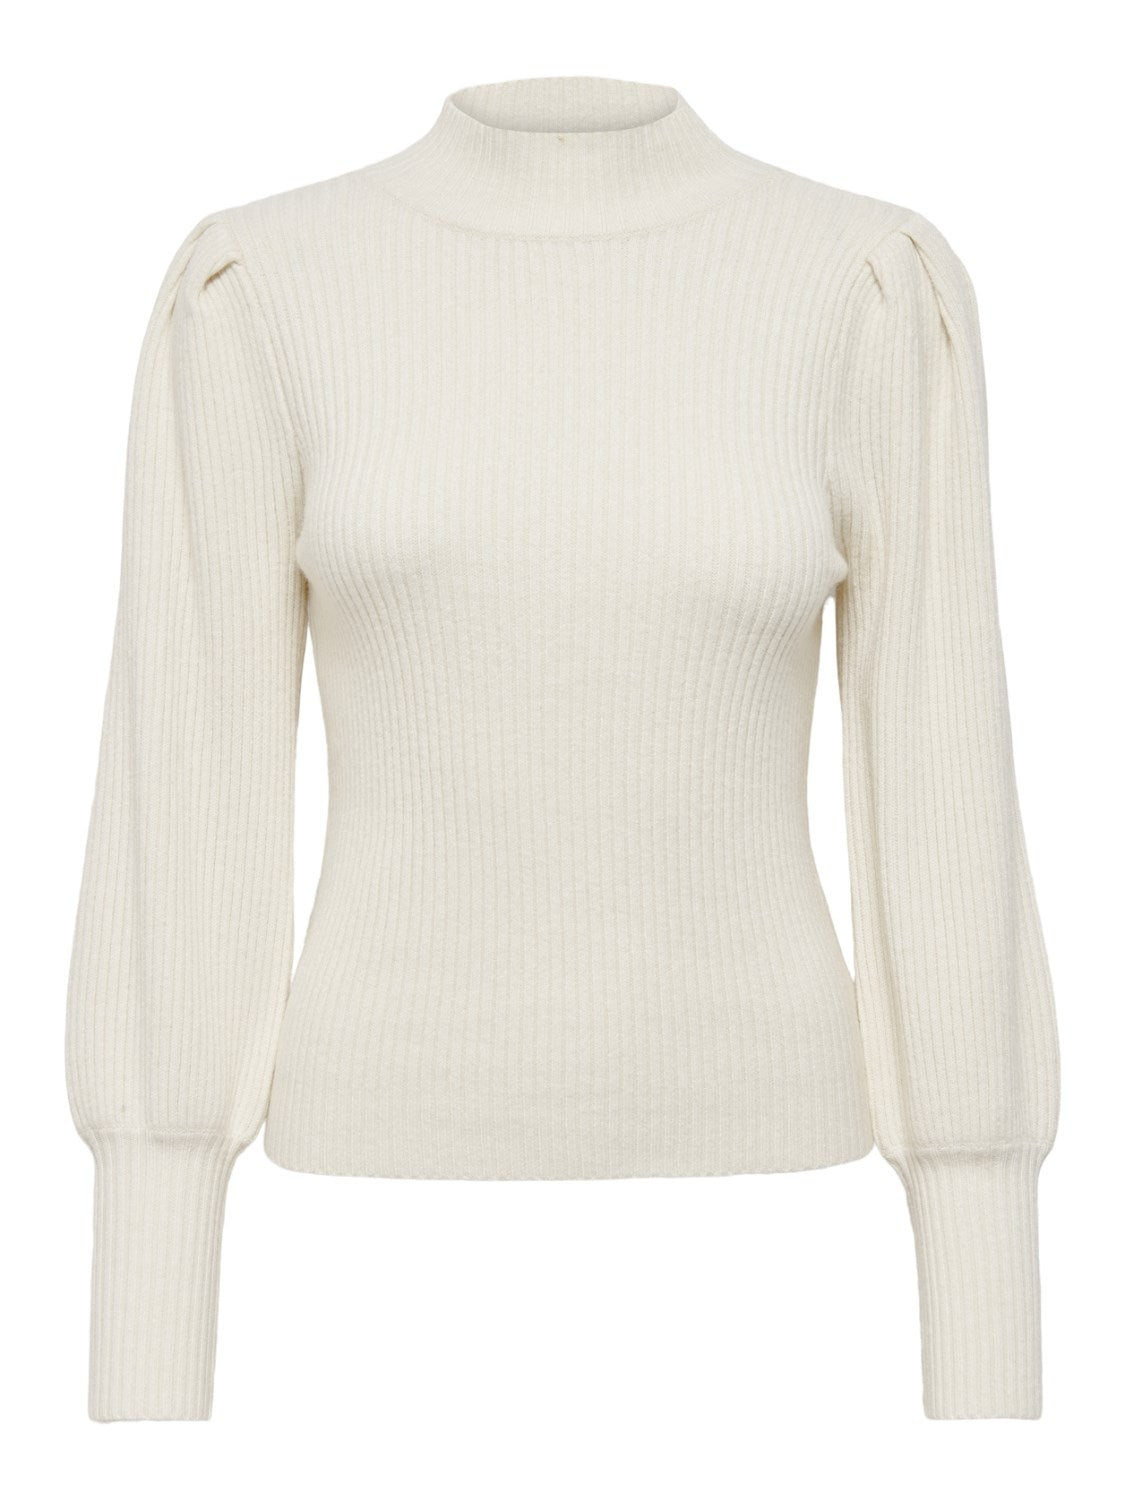 Ladies Katia Long Sleeve Highneck Pullover Knit-Whitecap Gray-Front View